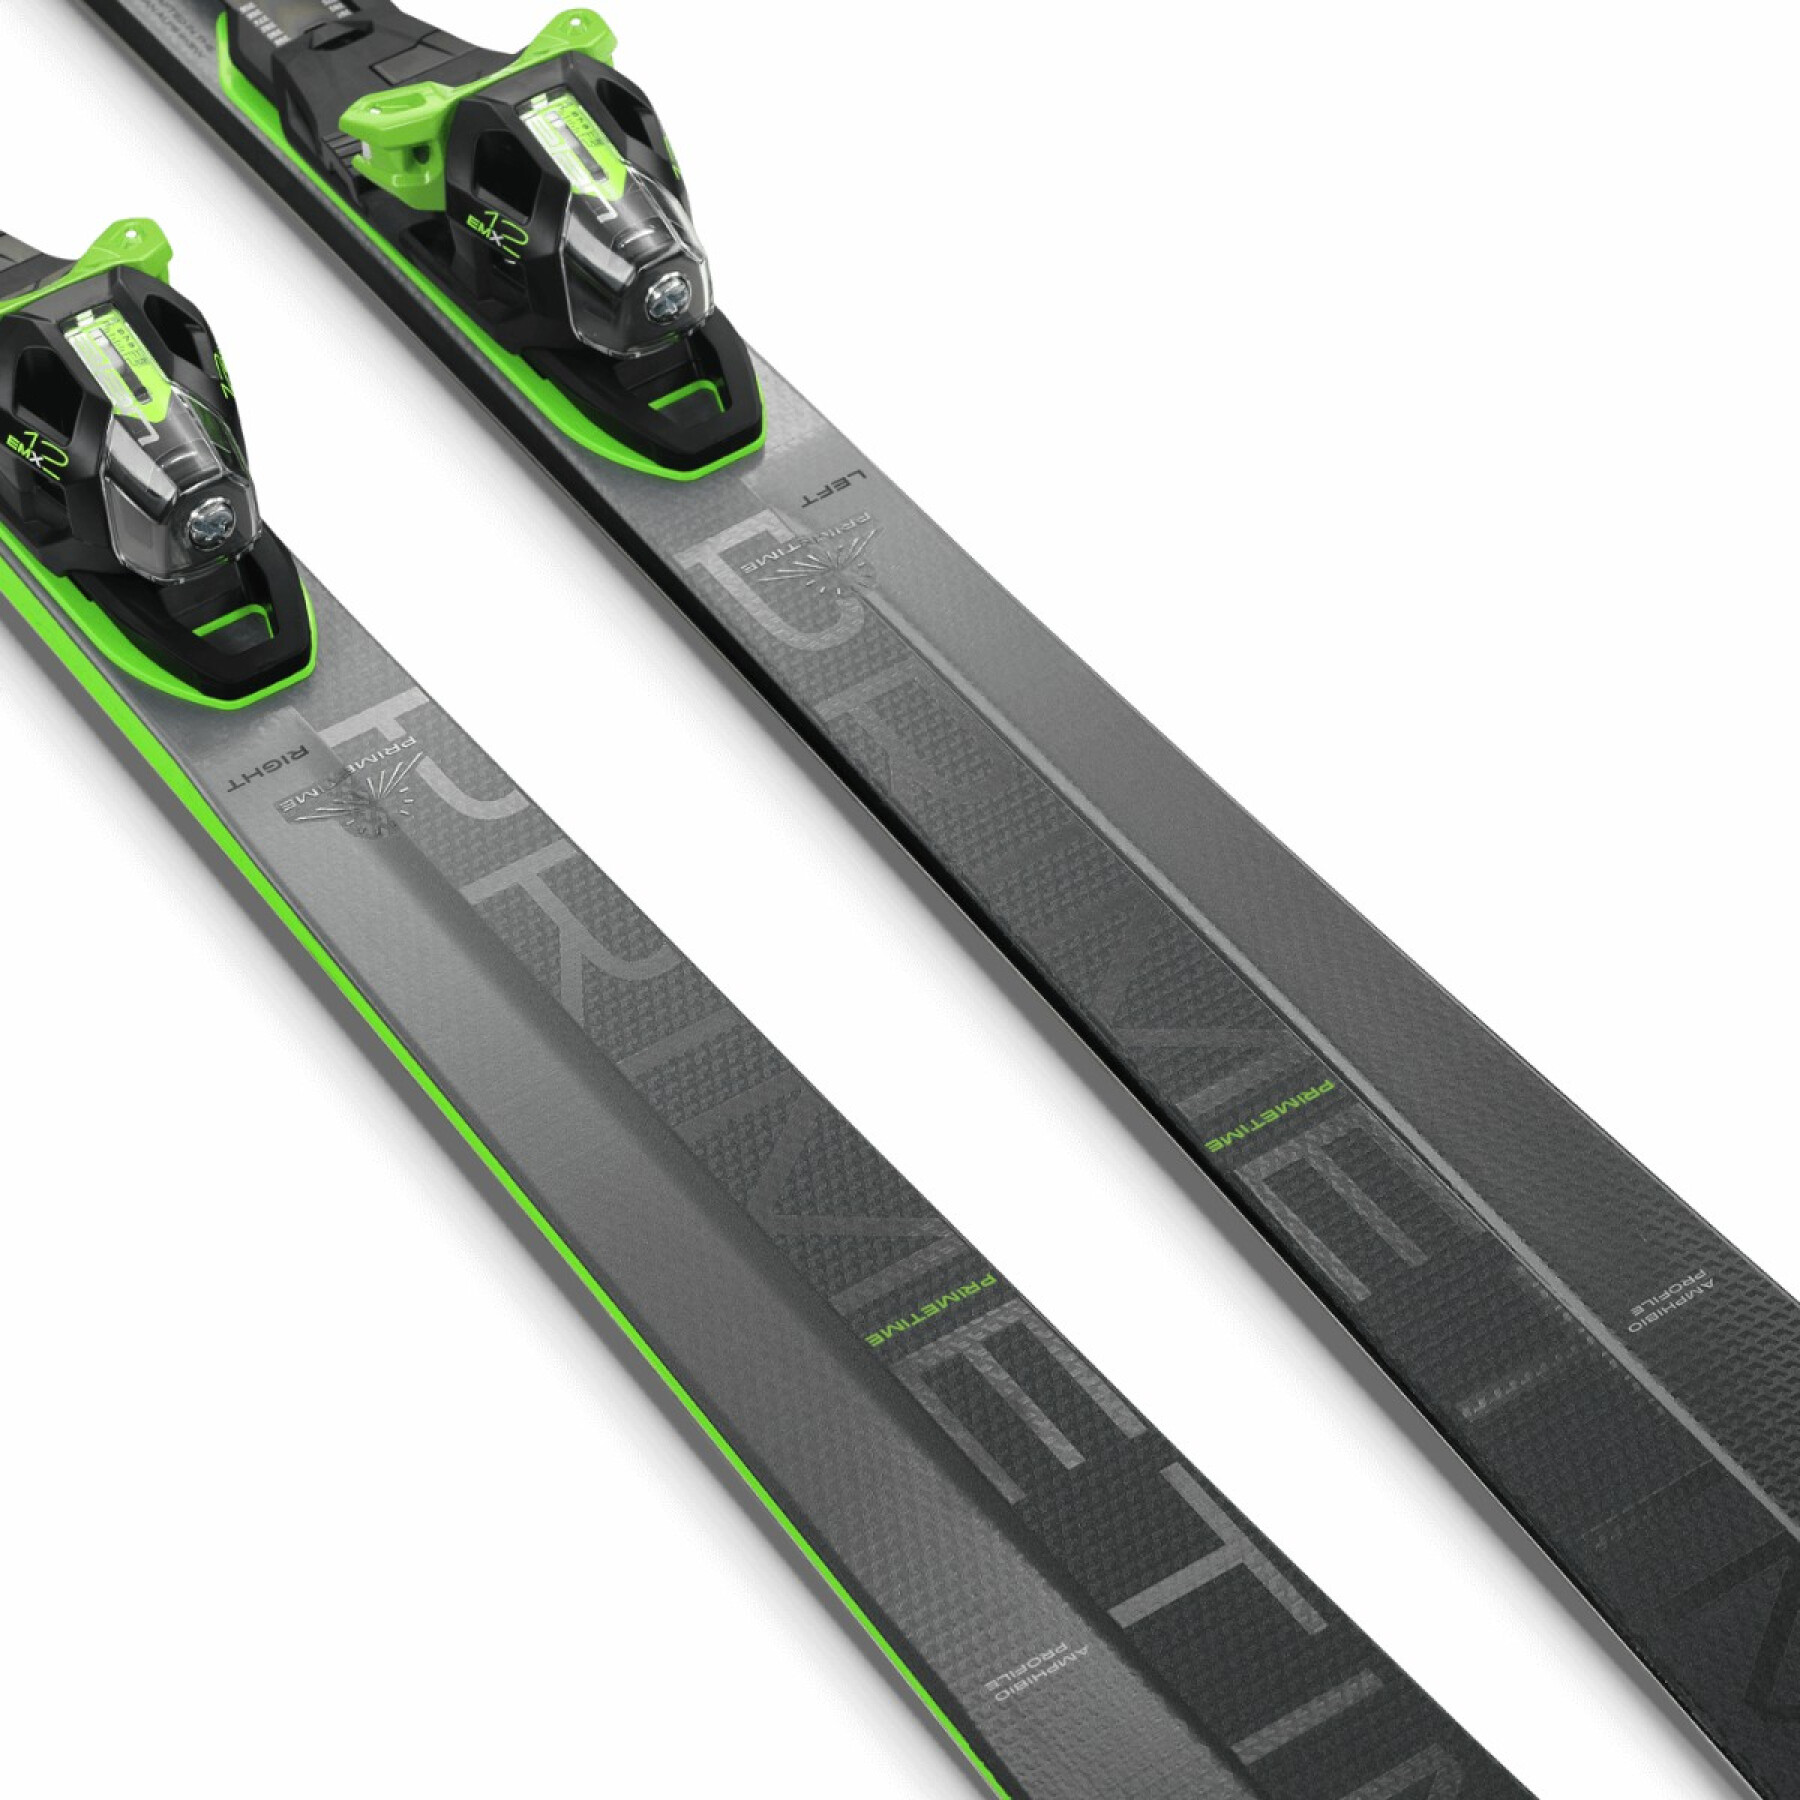 Primetime 55 fx emx12.0 ski pack with bindings Elan